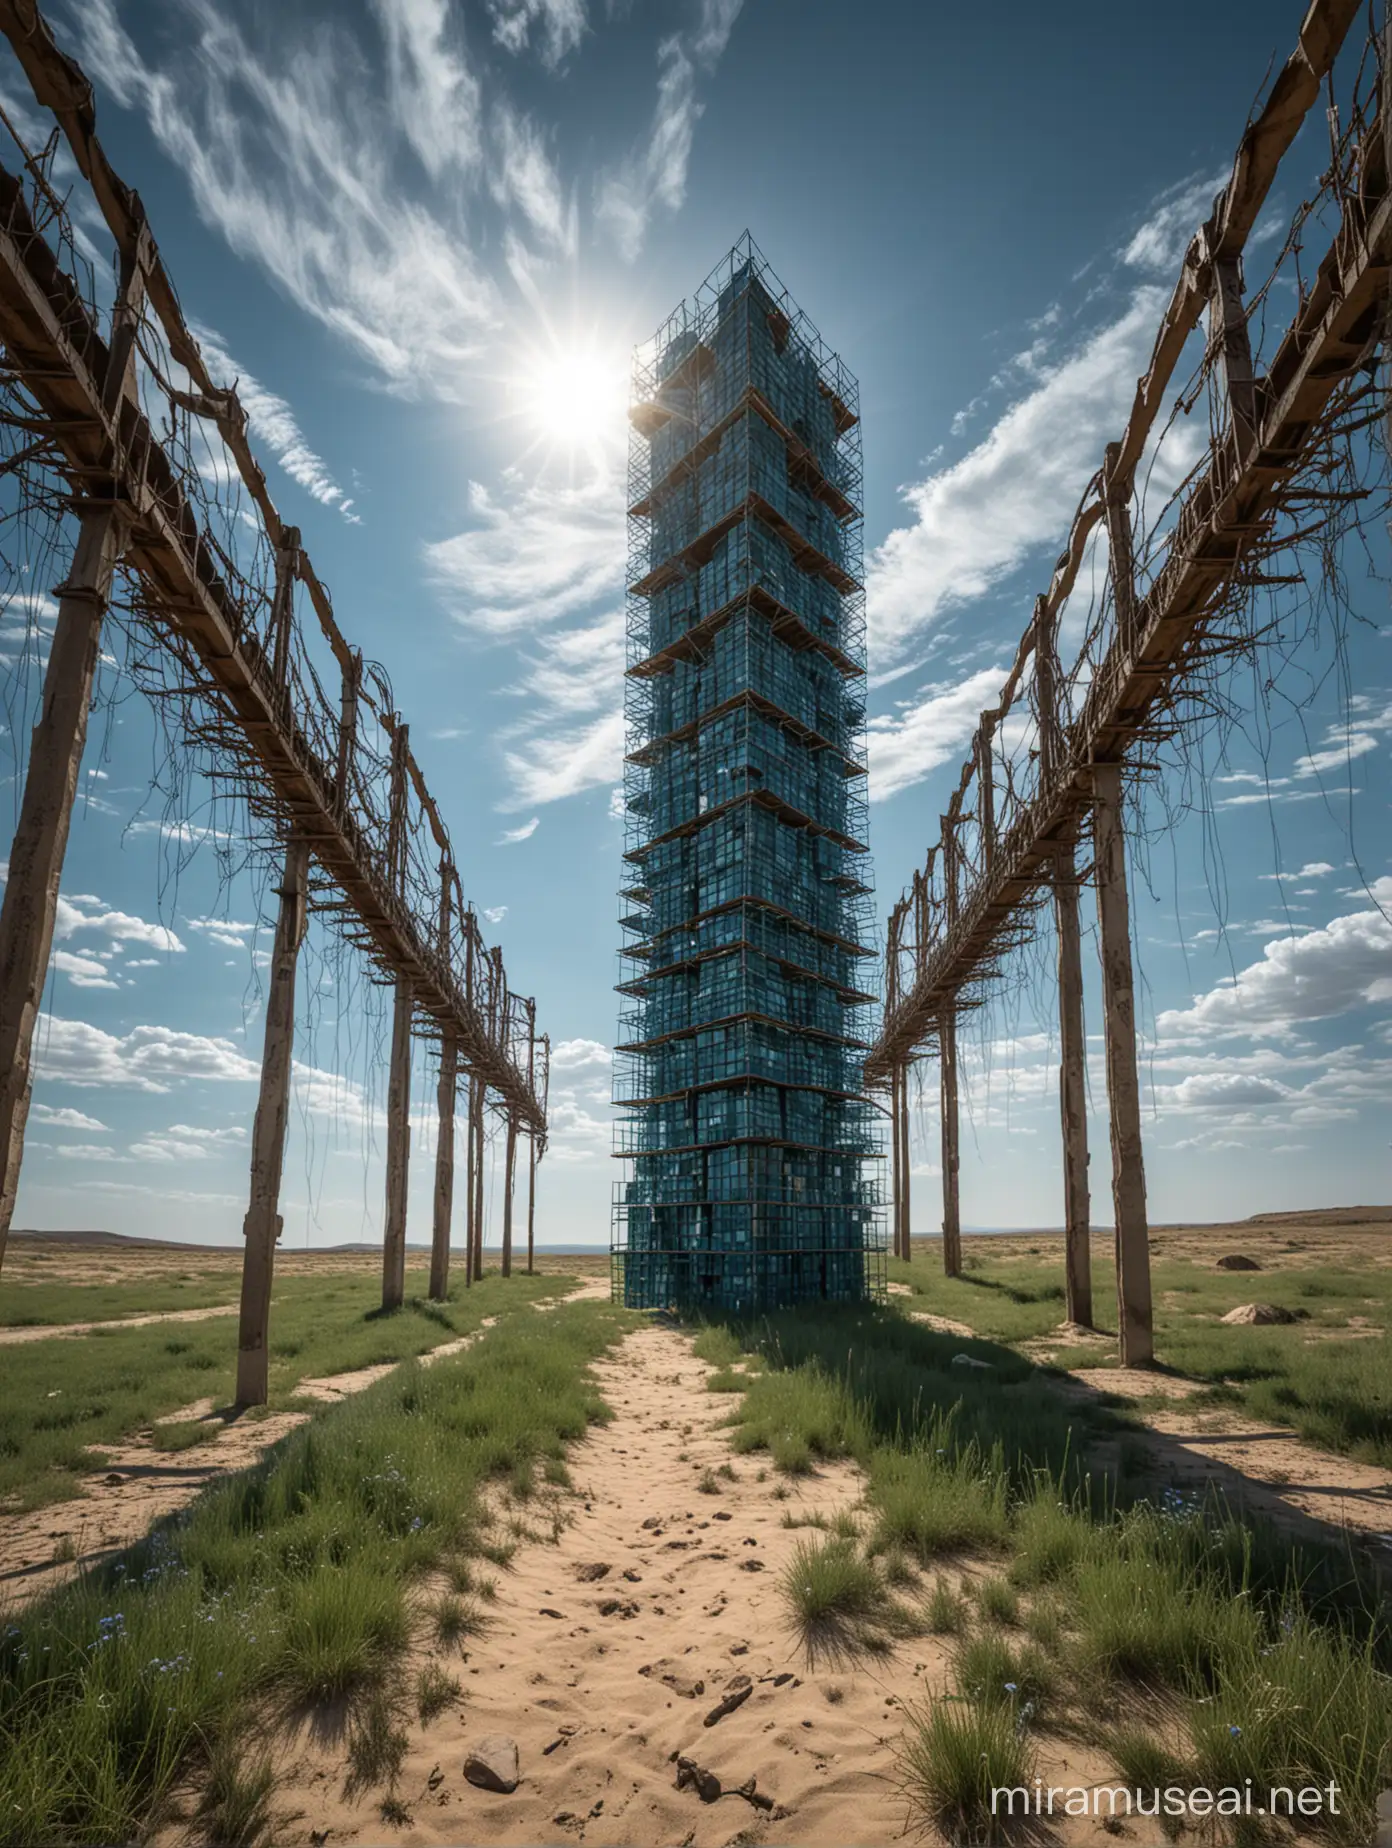 Majestic Steel Tower Rising from Vast Prairie